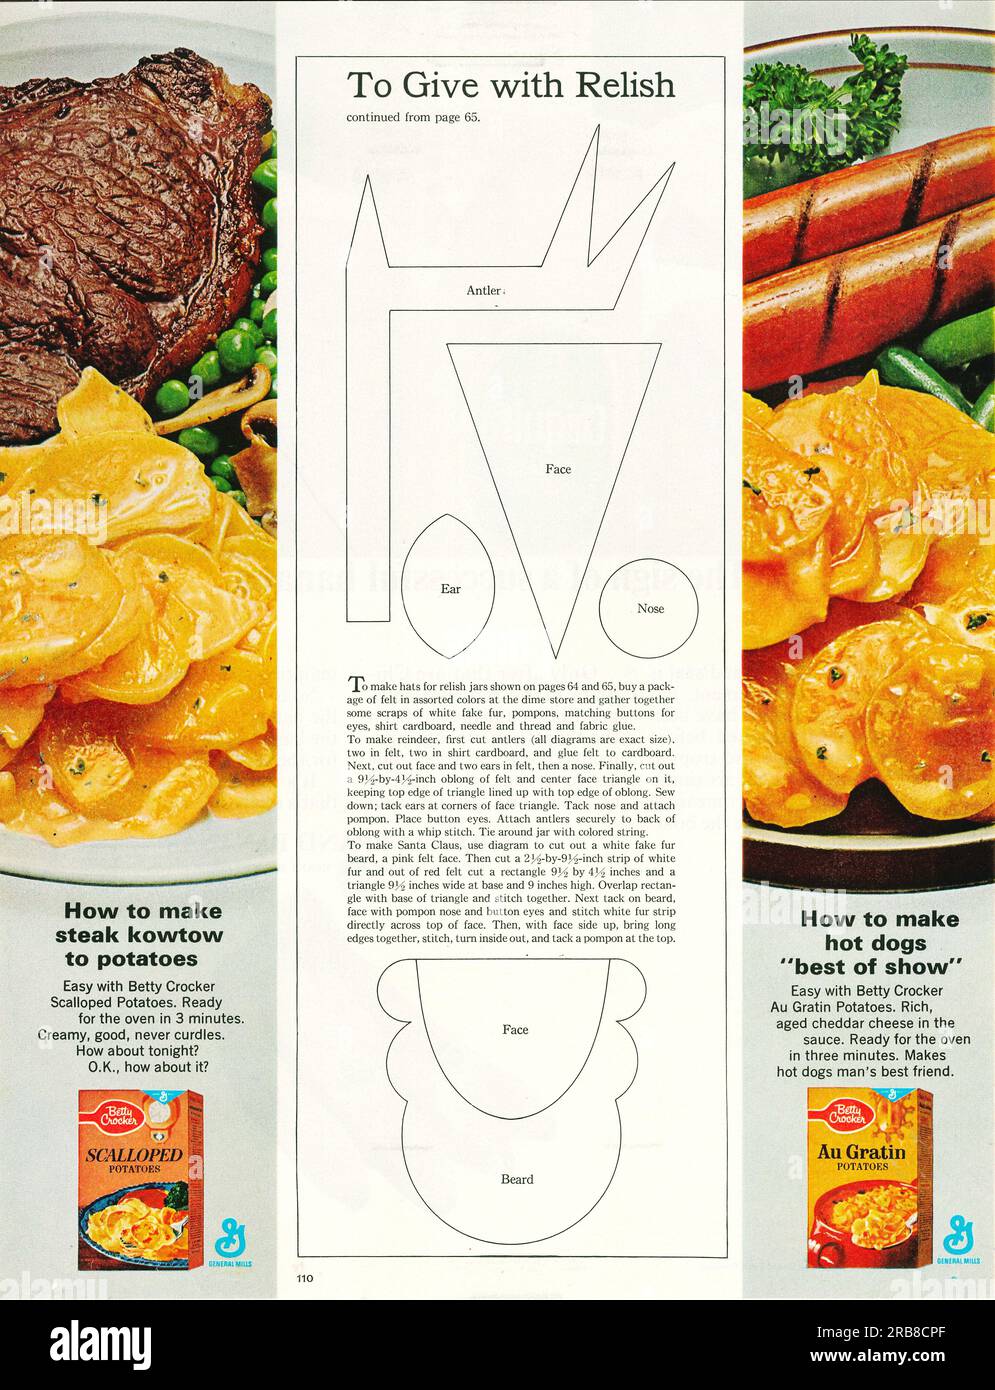 Betty Crocker Au Gratin Potatoes advert in a Journal magazine, 1965 Stock Photo